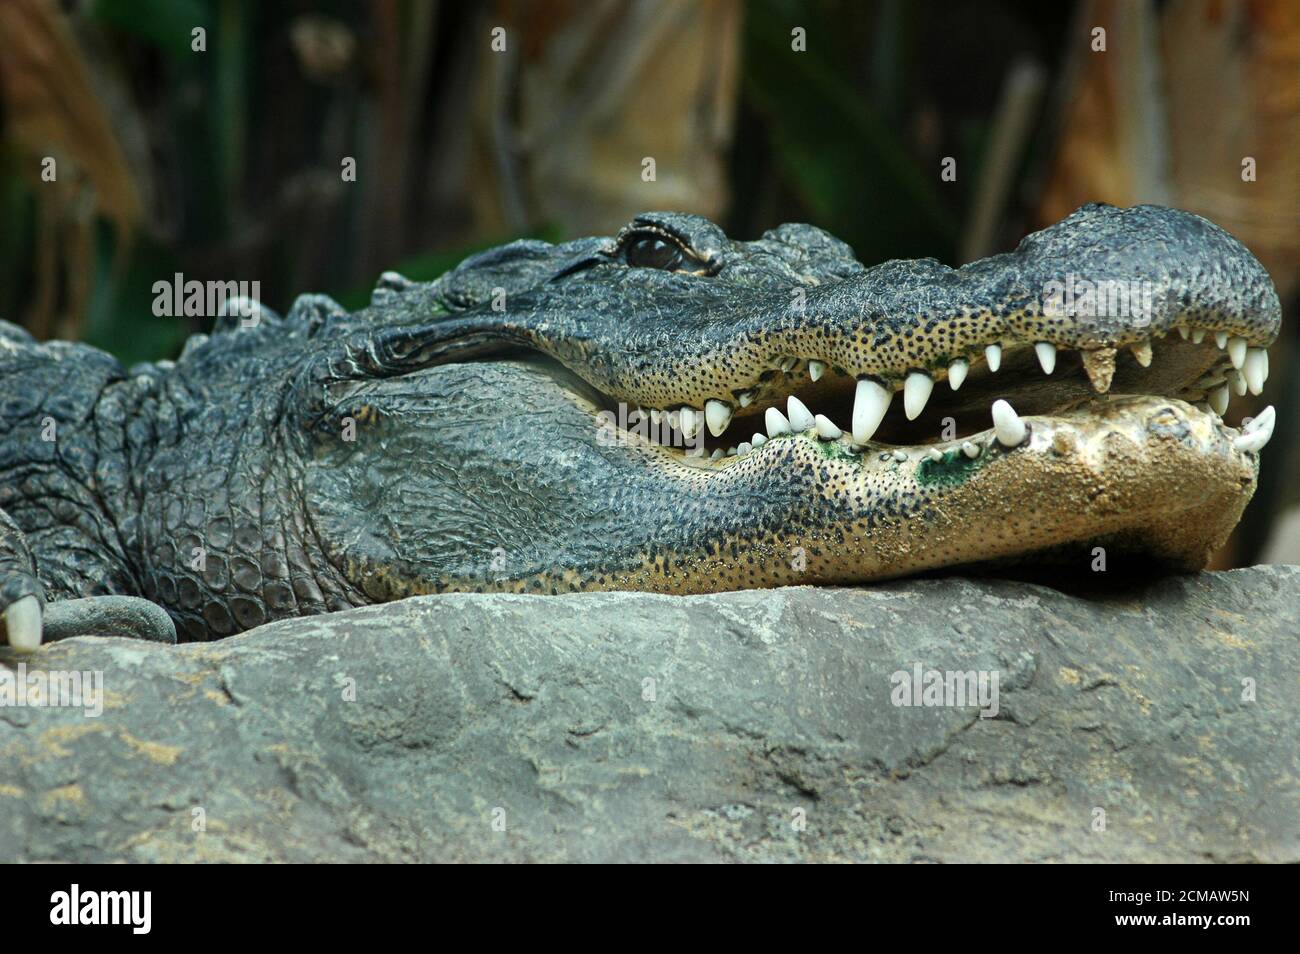 Nile crocodile or Crocodylus niloticus, close-up head showing ferocious teeth and focused eyes, dangerous African apex predator living near water Stock Photo